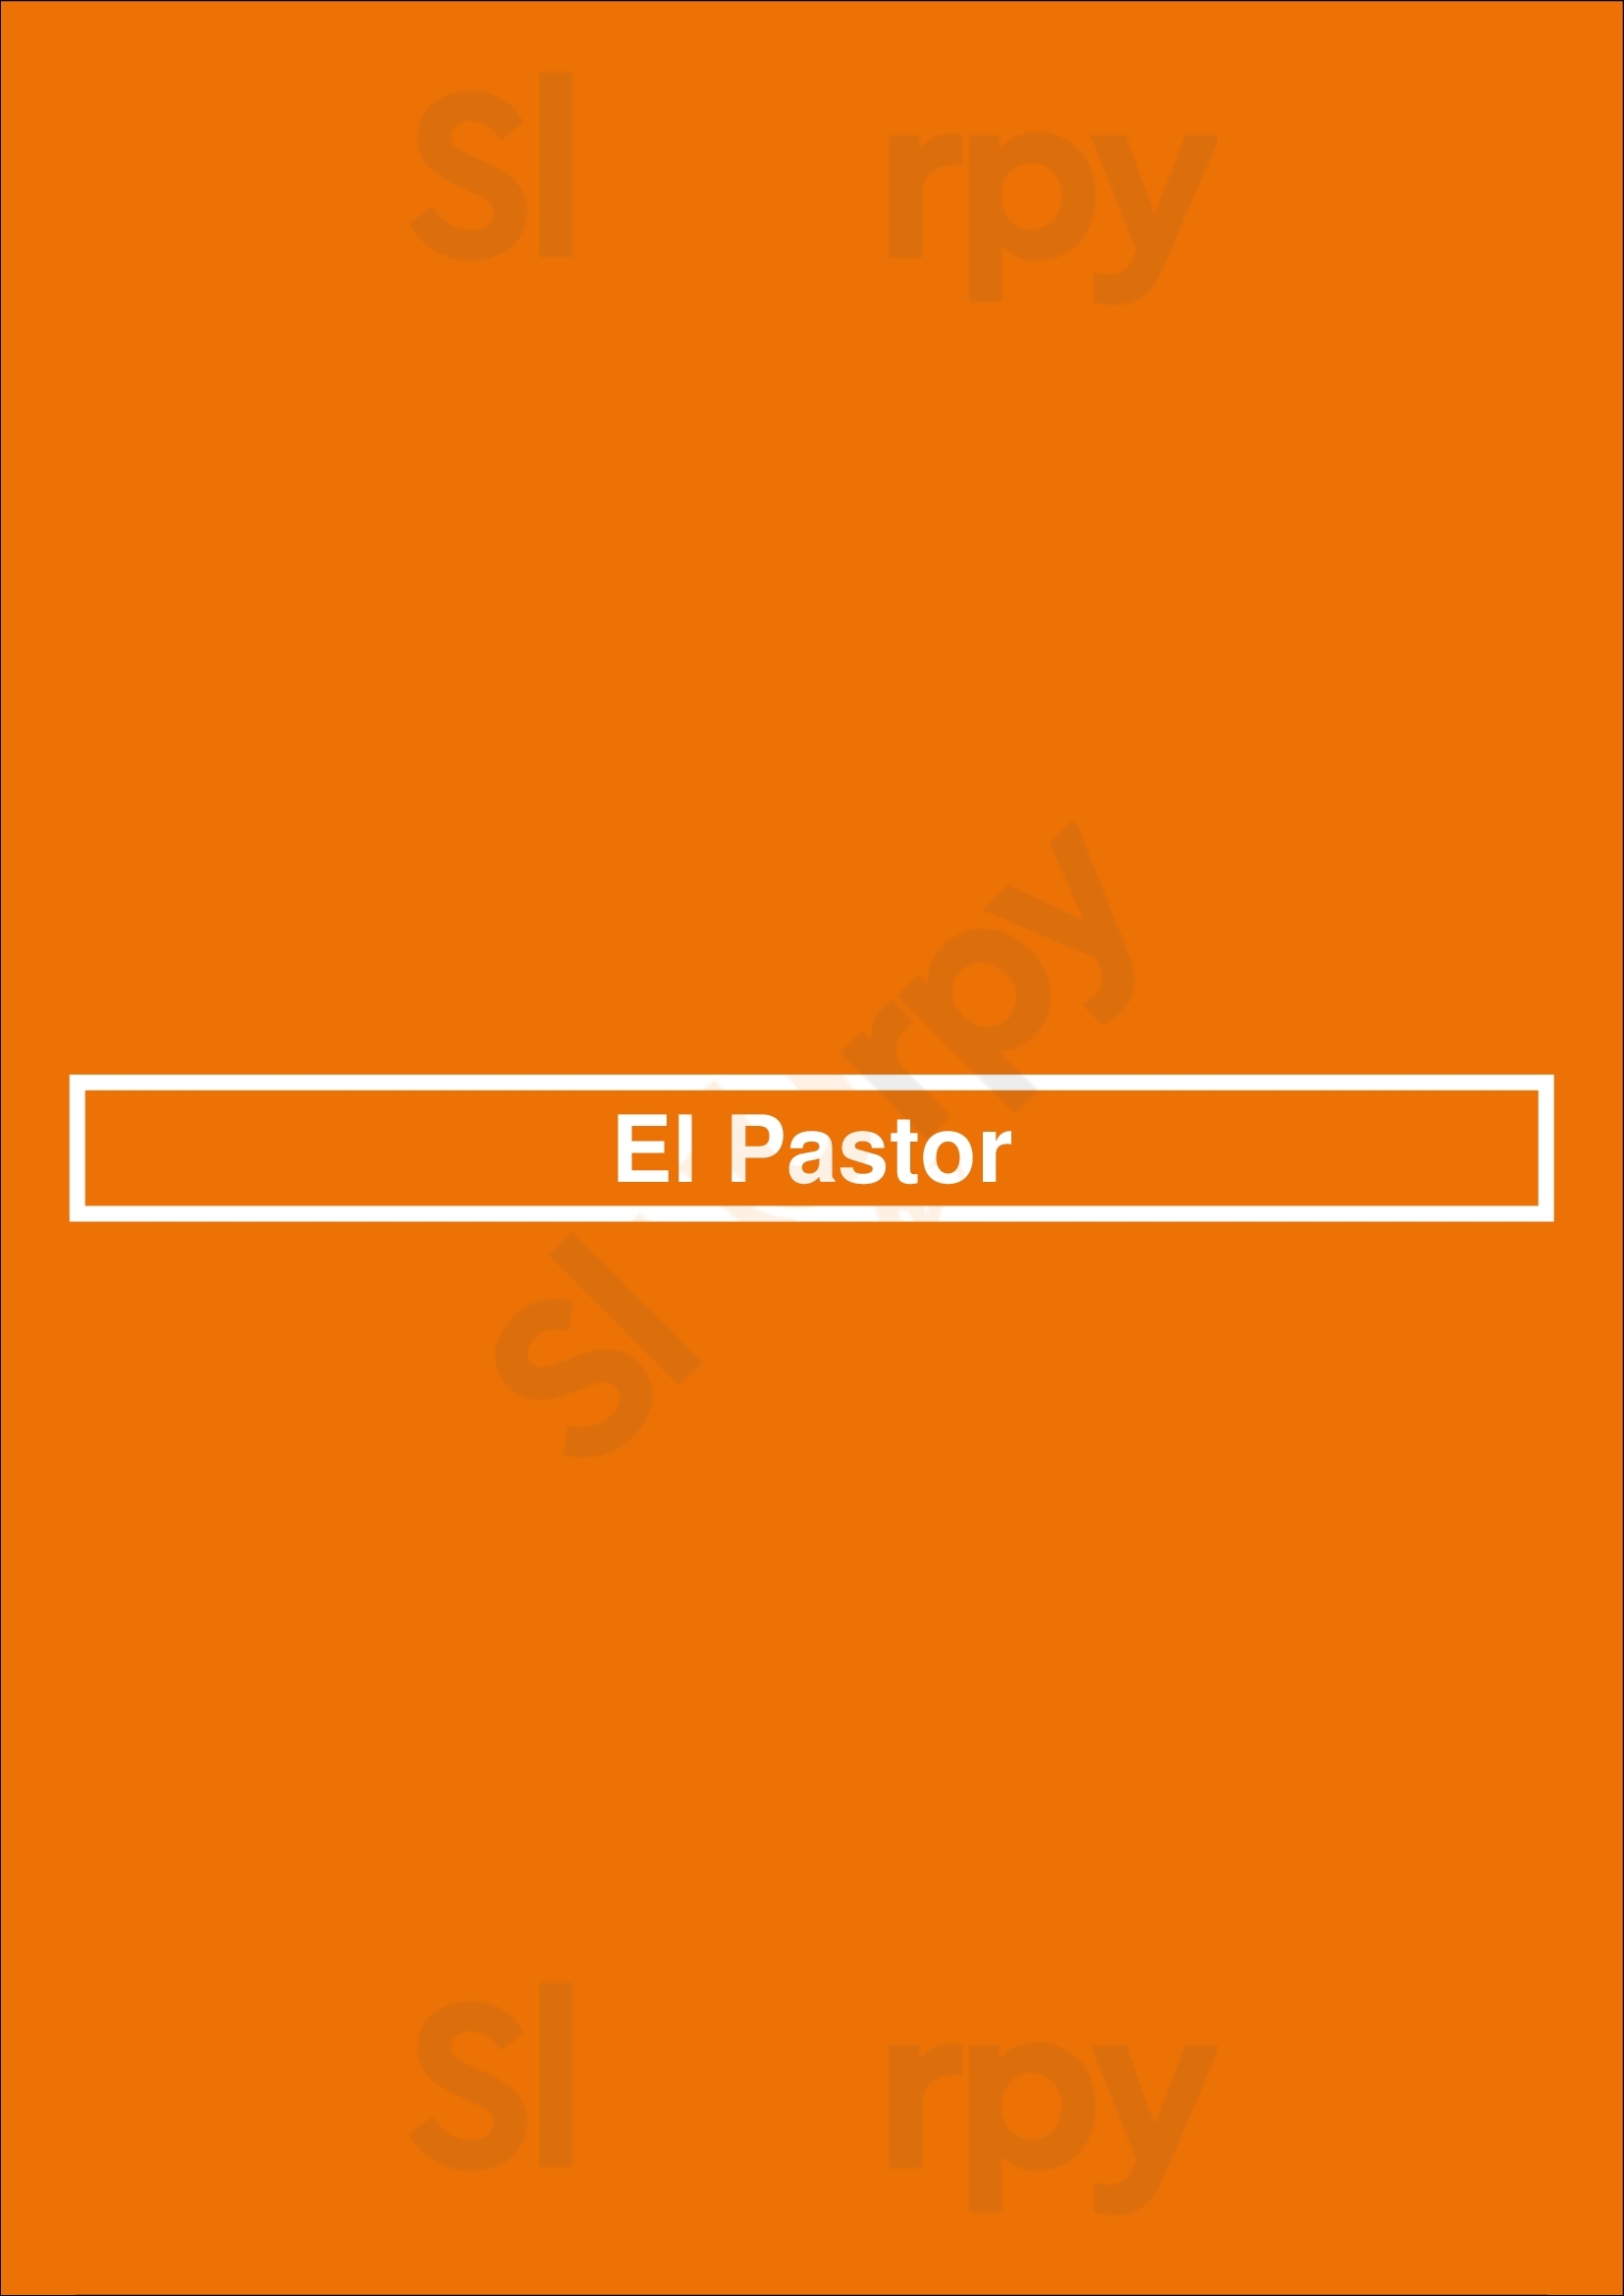 El Pastor Mexican Restaurant Madison Menu - 1